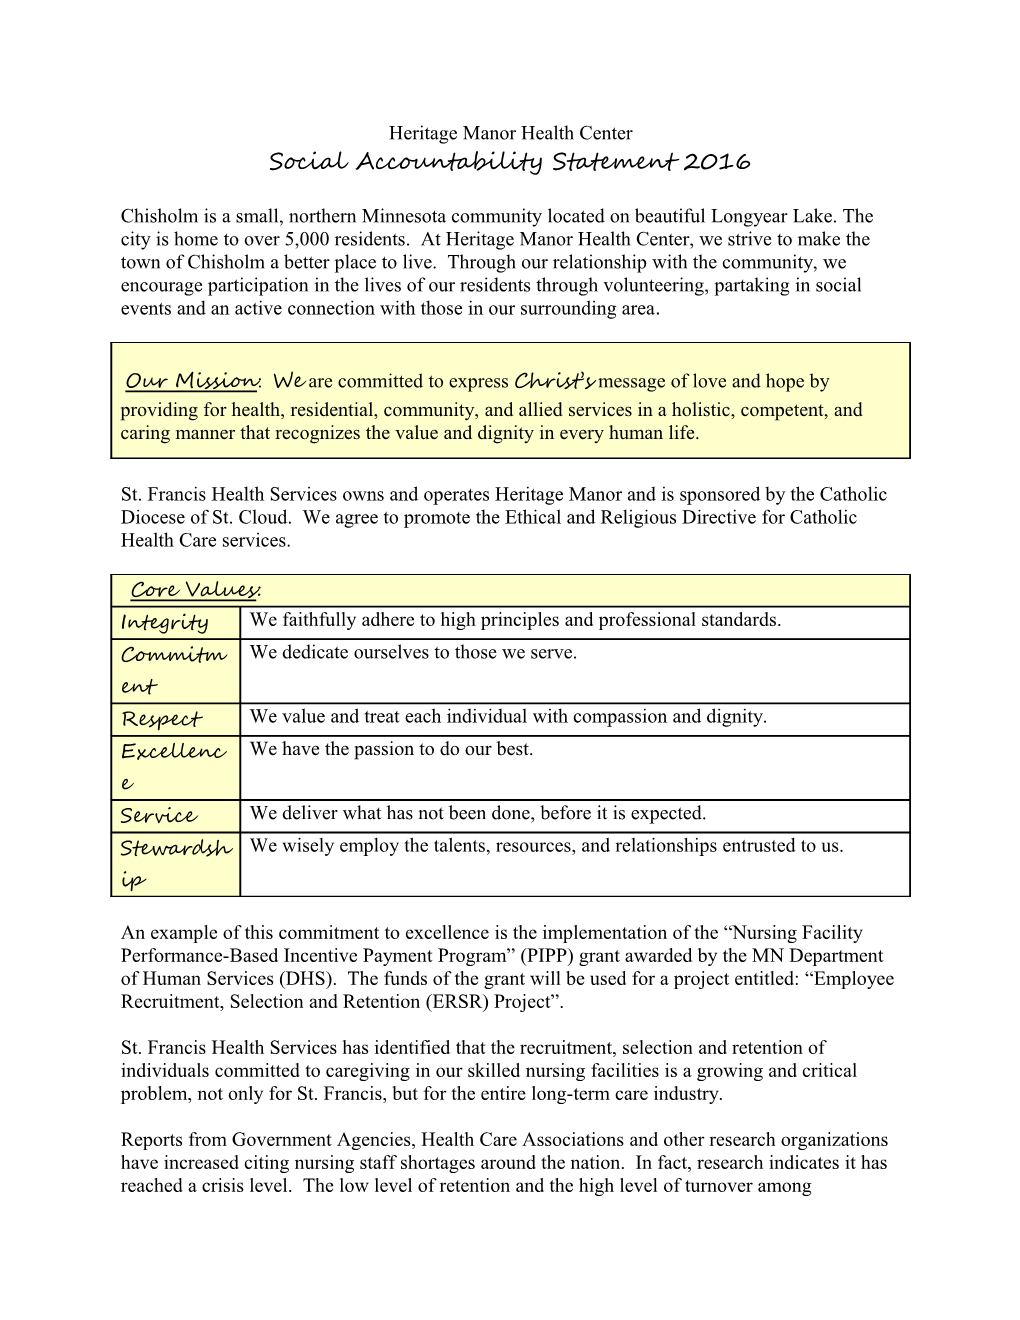 Social Accountability Statement s1